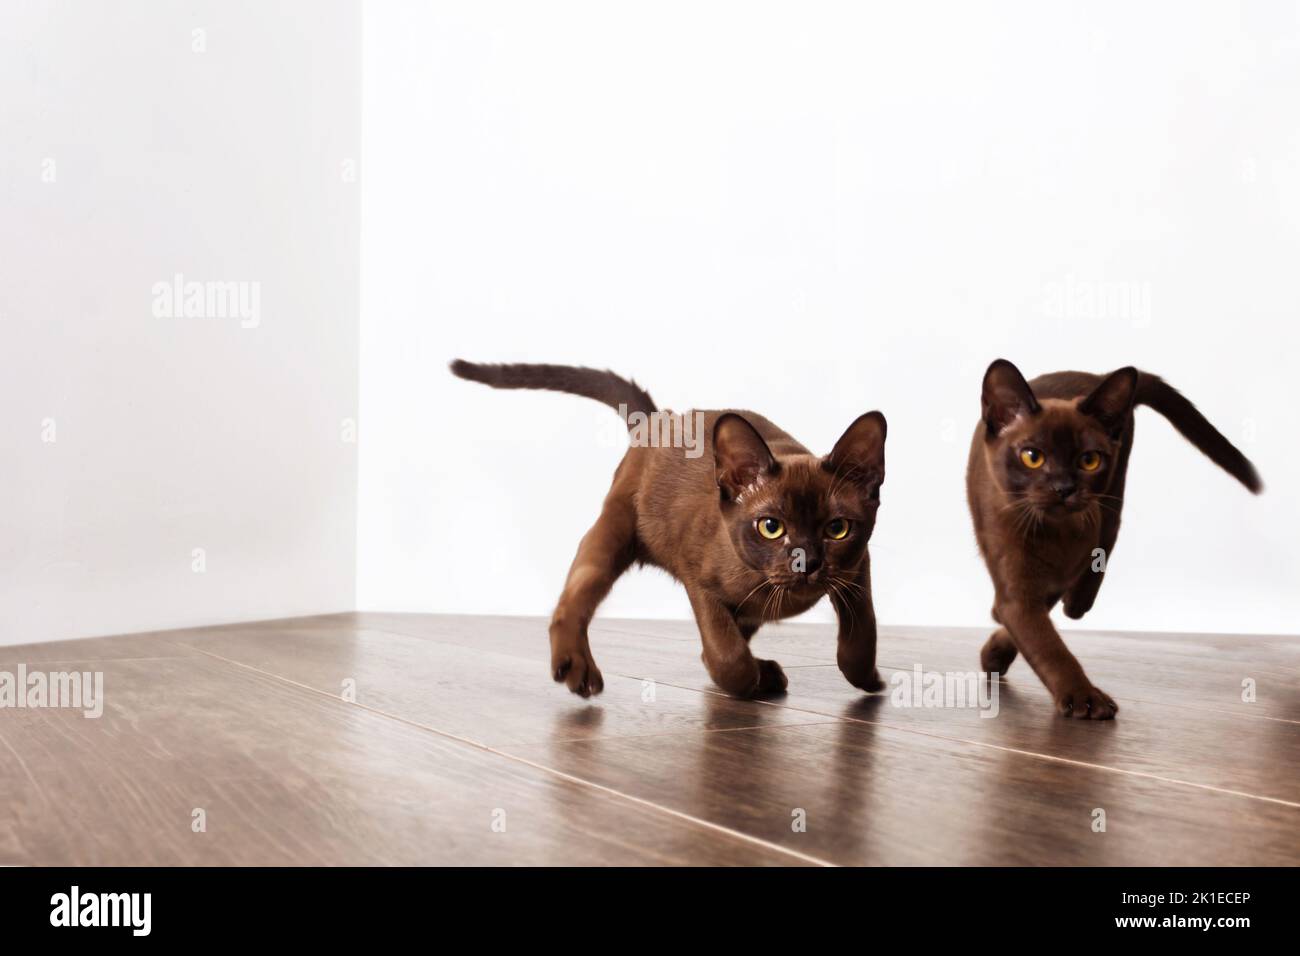 Playful cute burmese kittens. Active cat breed. Stock Photo